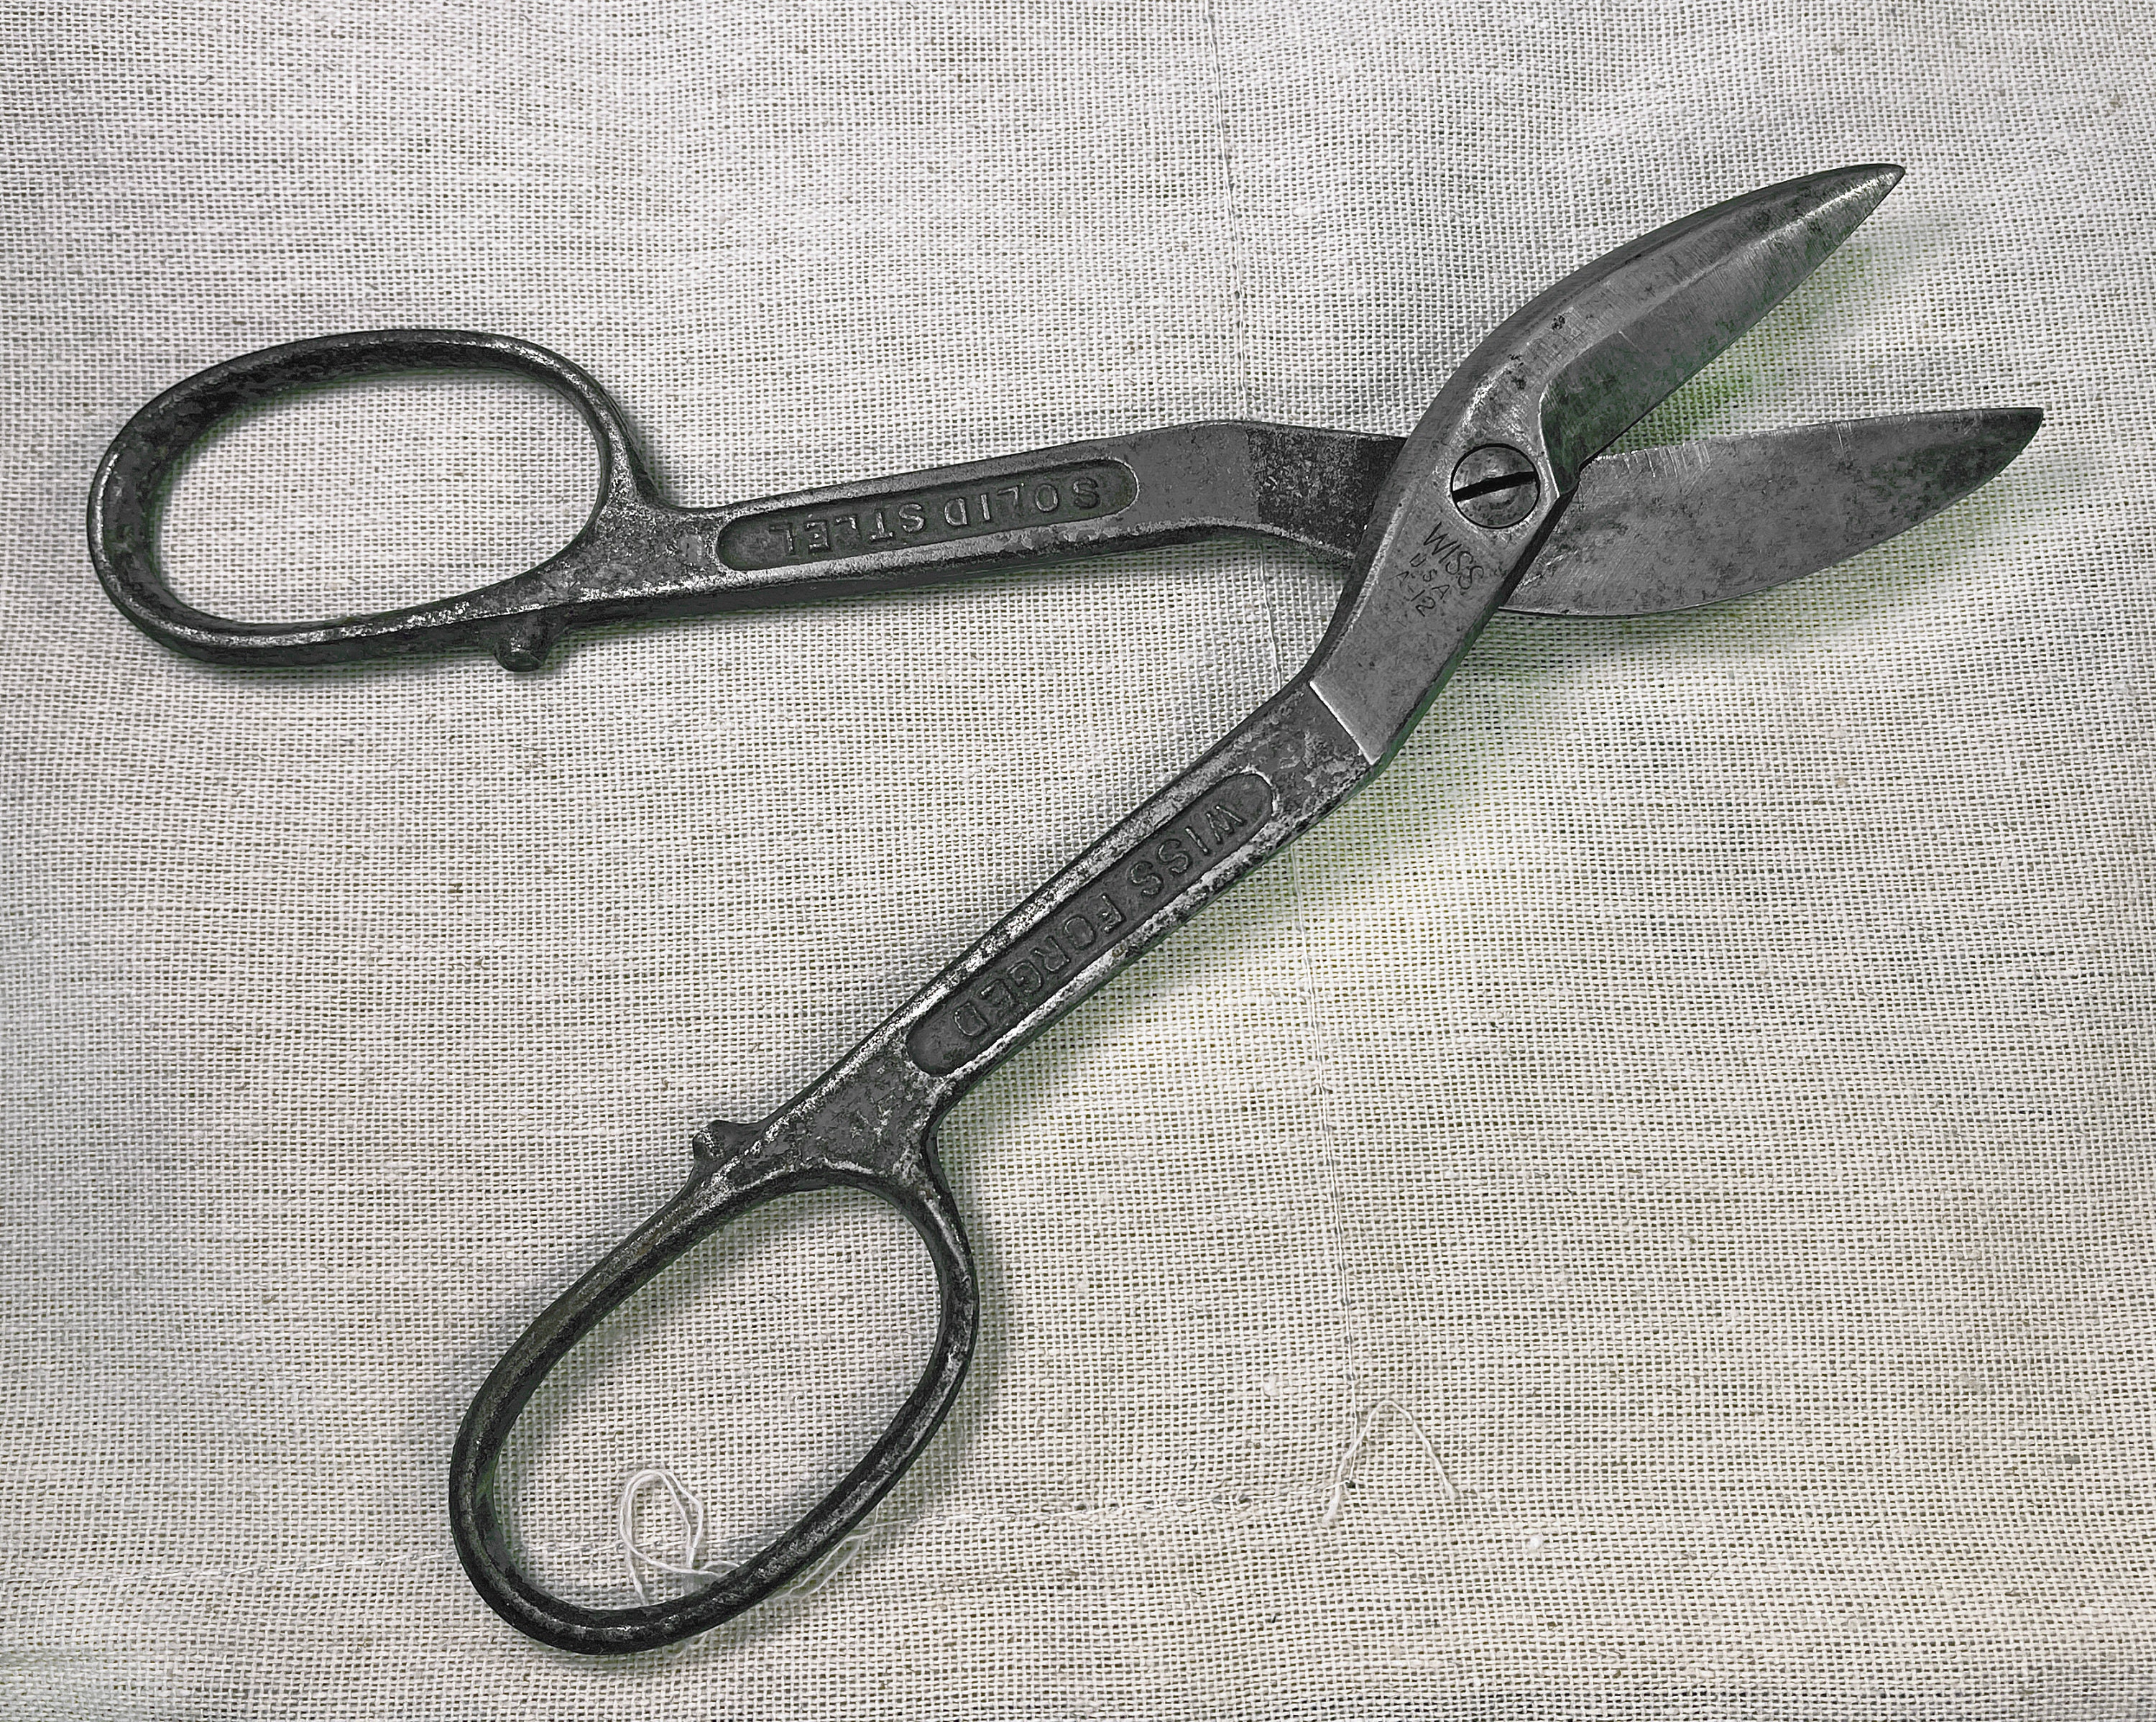 Antique c1870s Cut Steel Sewing Scissors, Desk or Vanity Shears - Ruby Lane